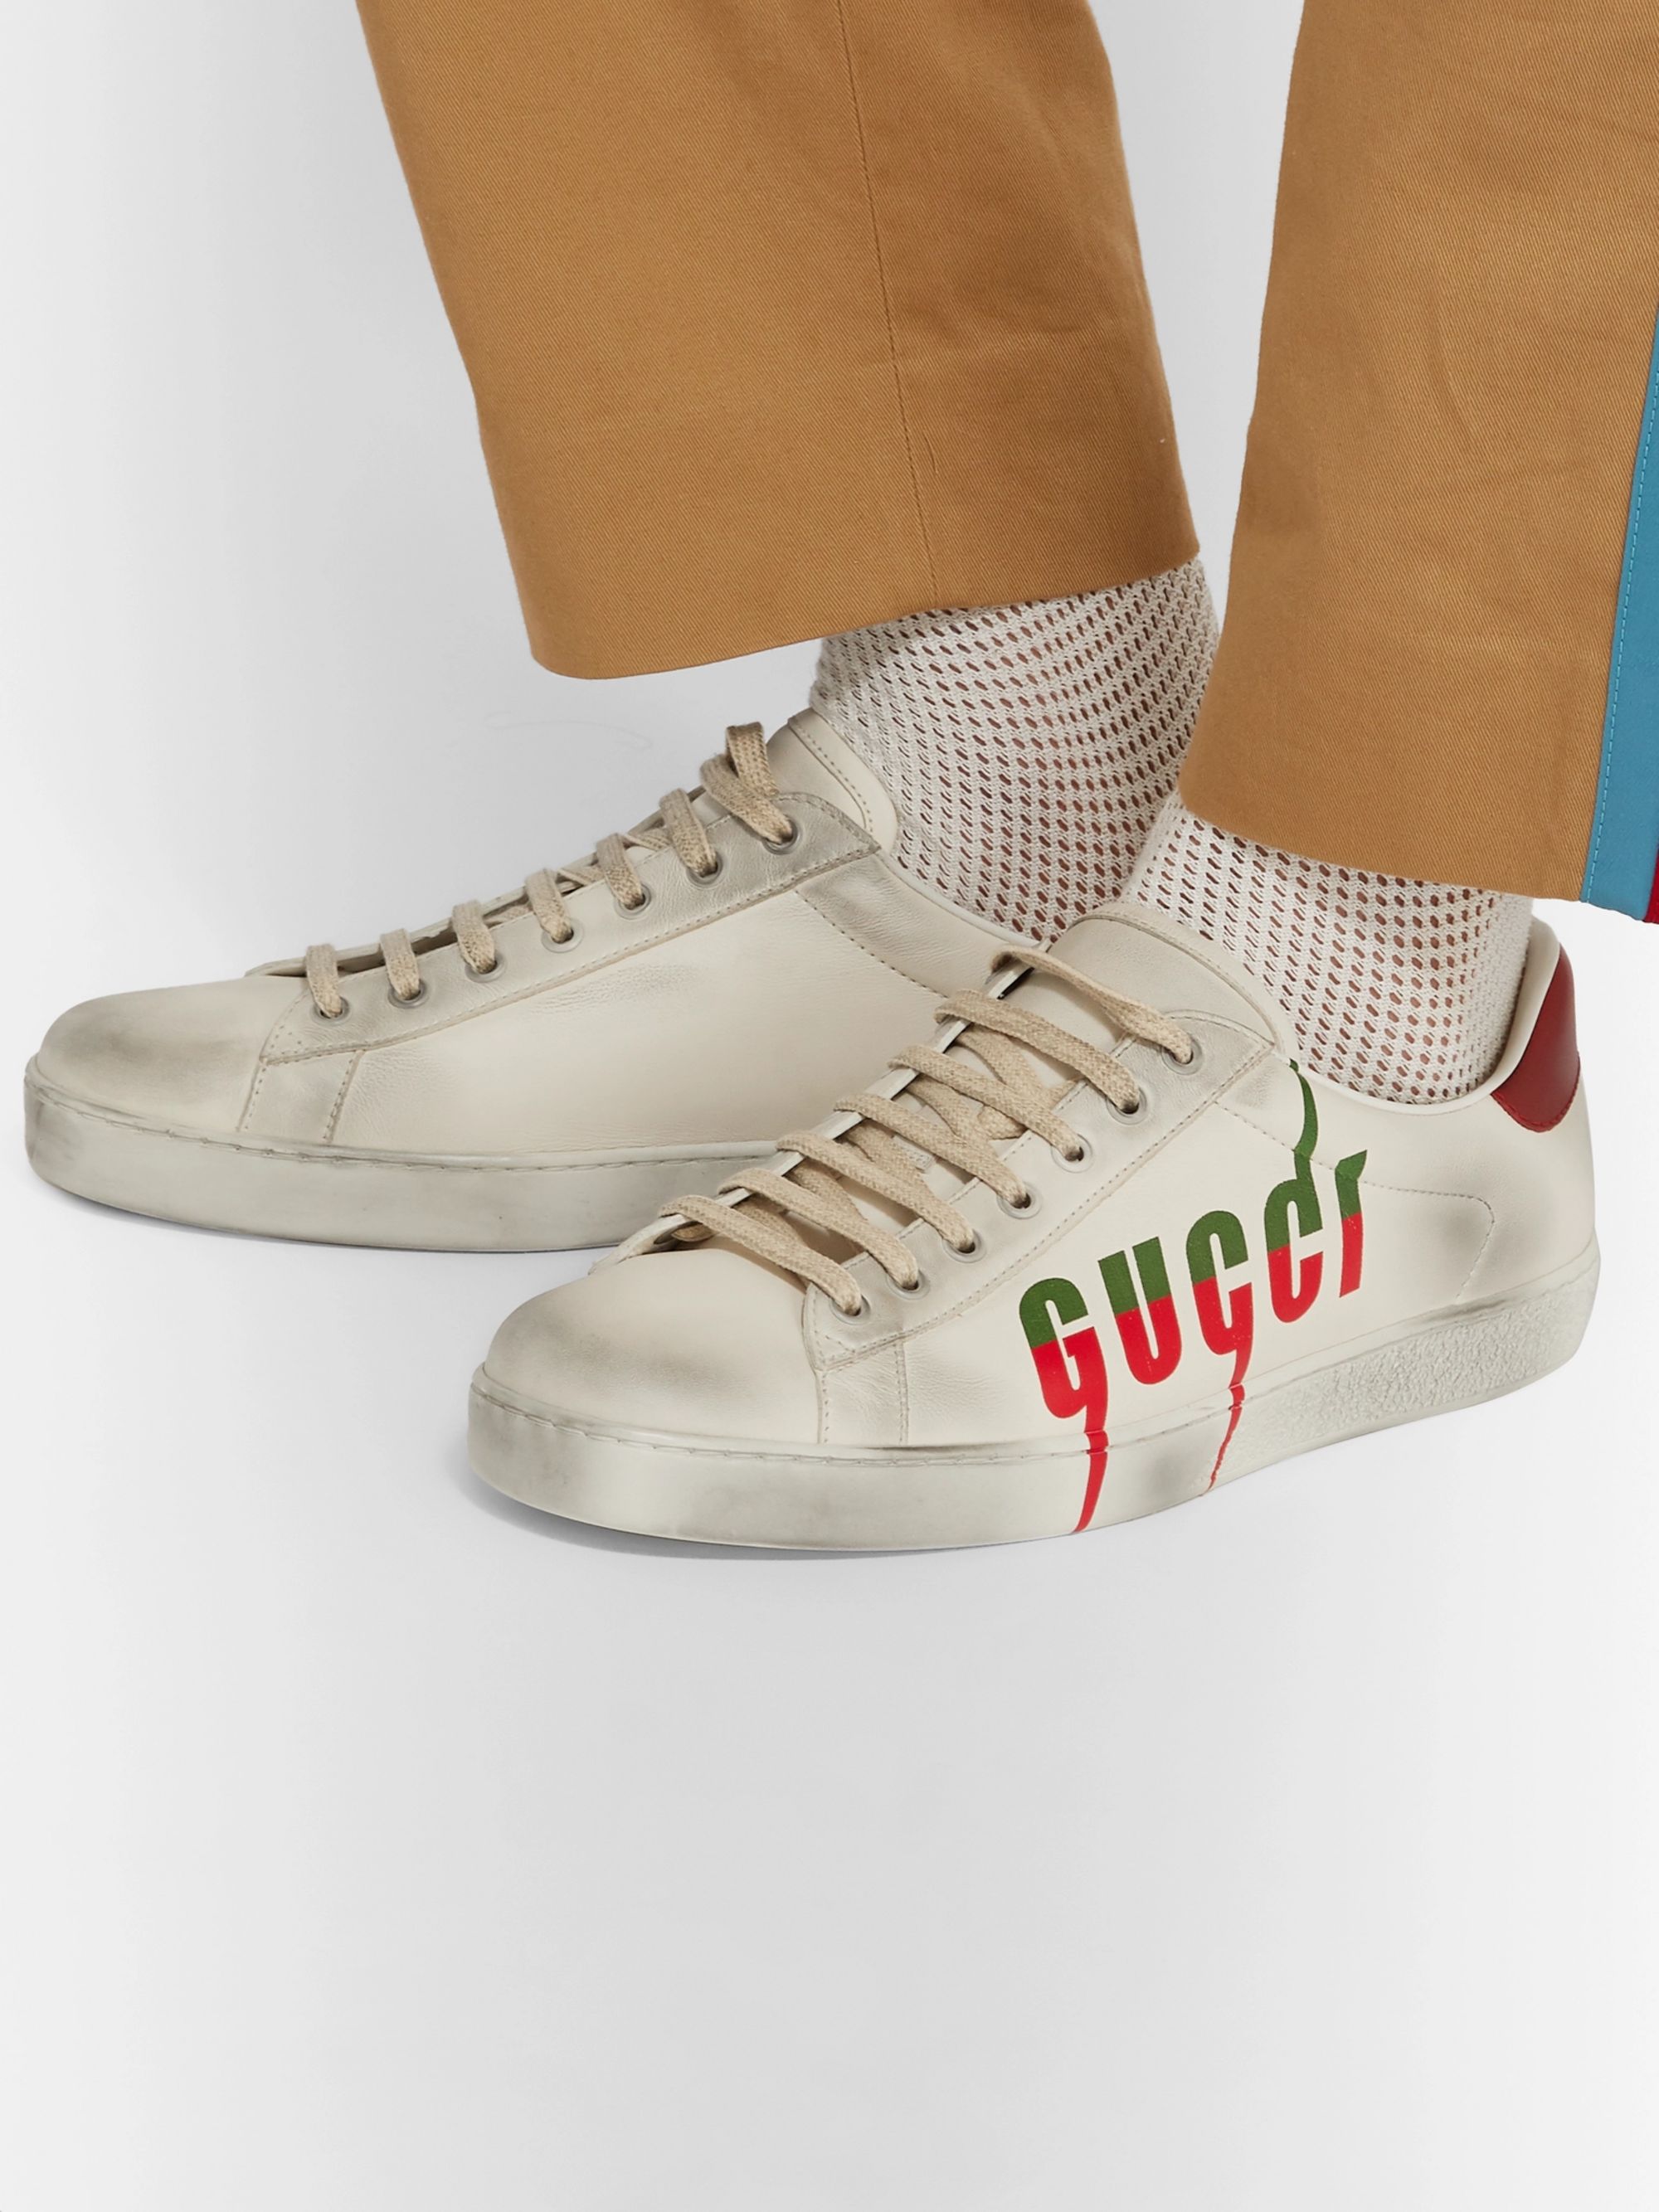 gucci distressed sneaker